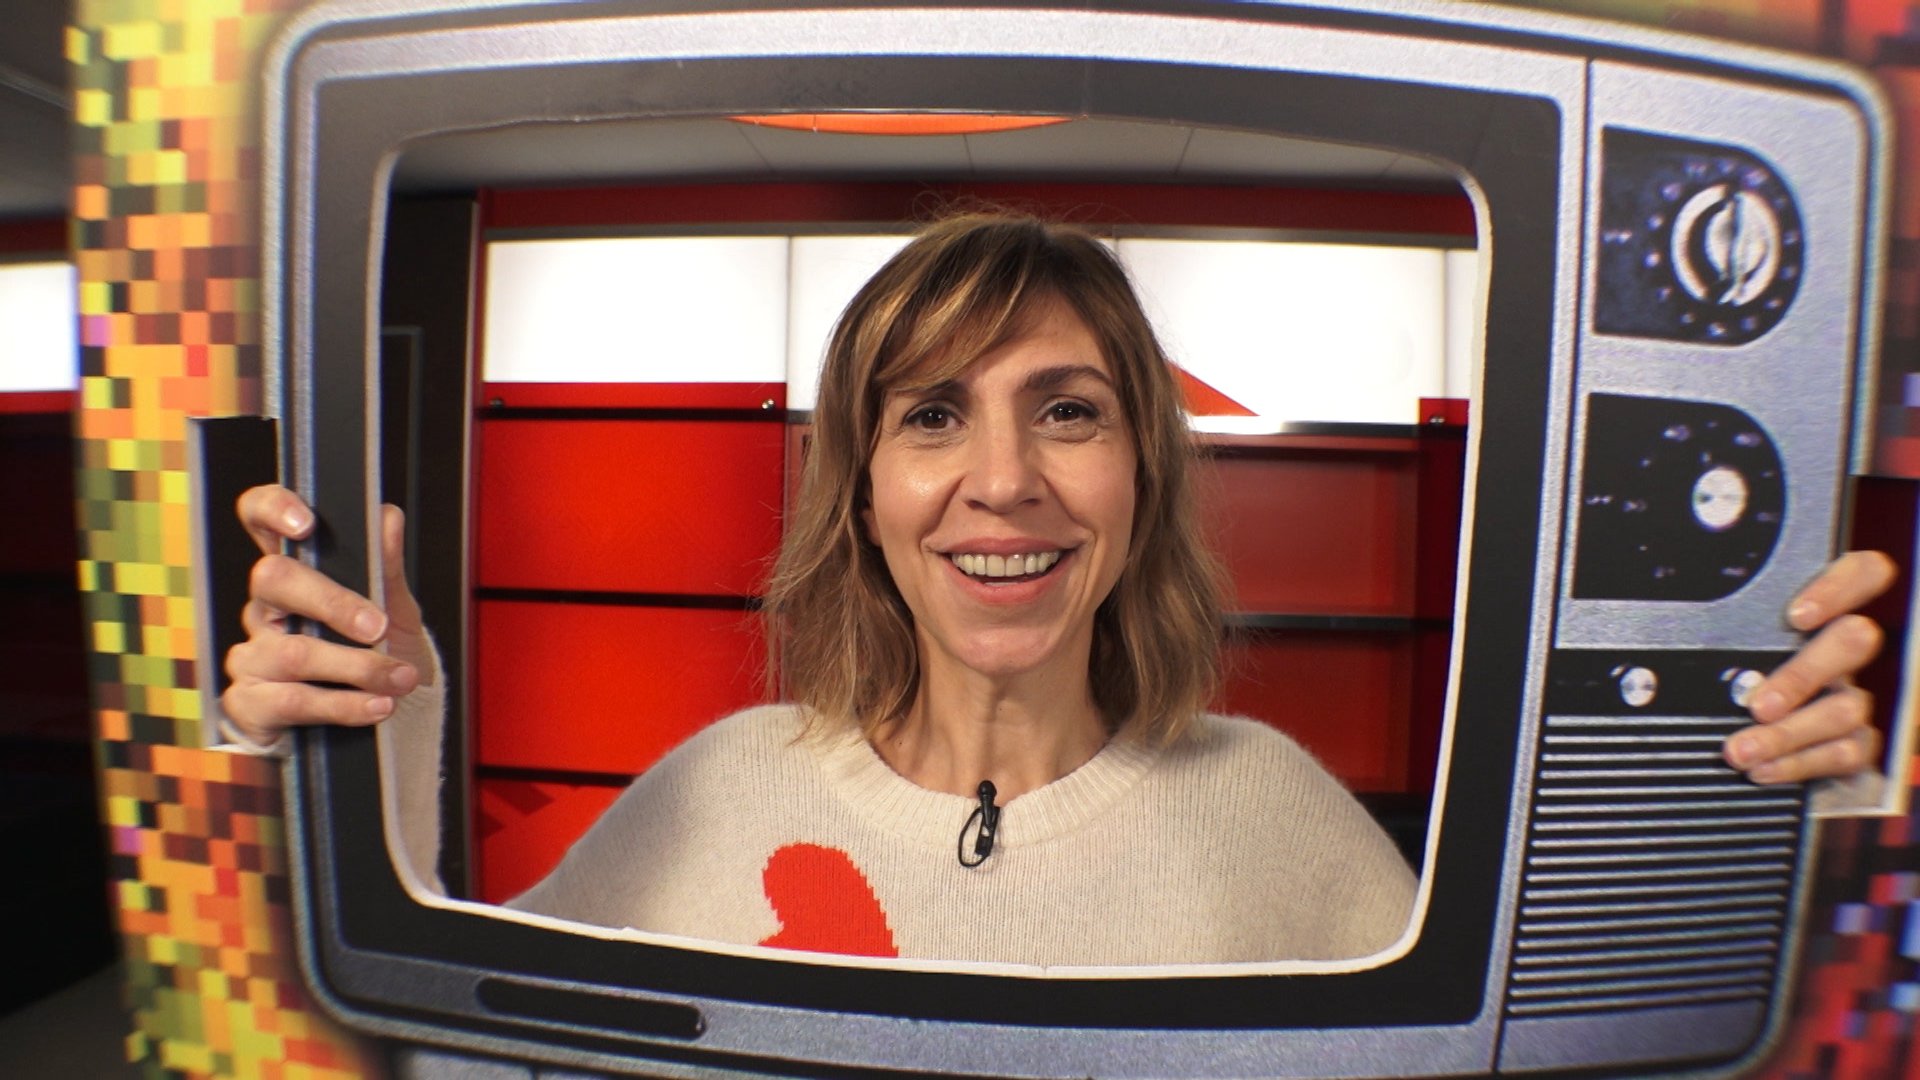 Cristina Puig responde a TV3 si FAQS rema a favor de un determinado partido político